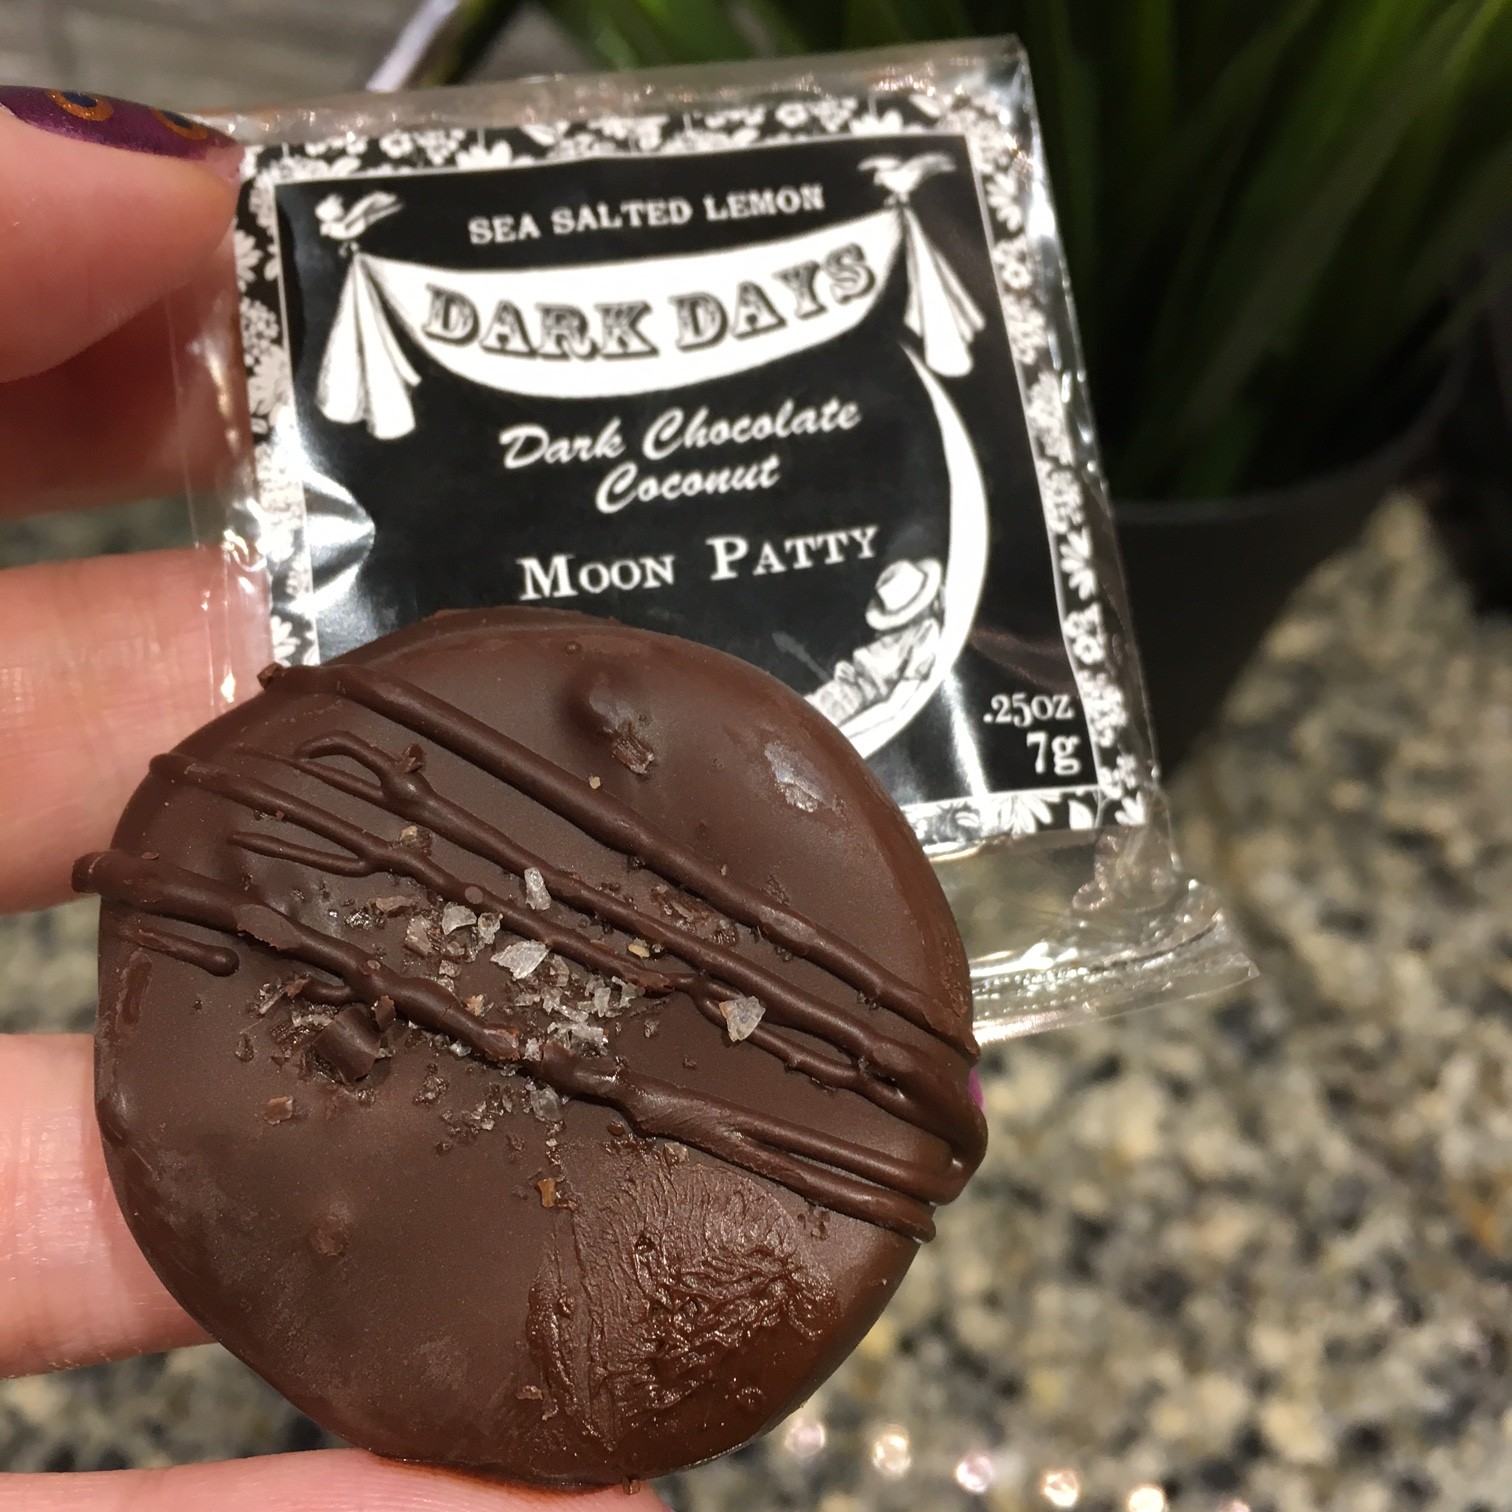 Dark Days Chocolate Moon Patty